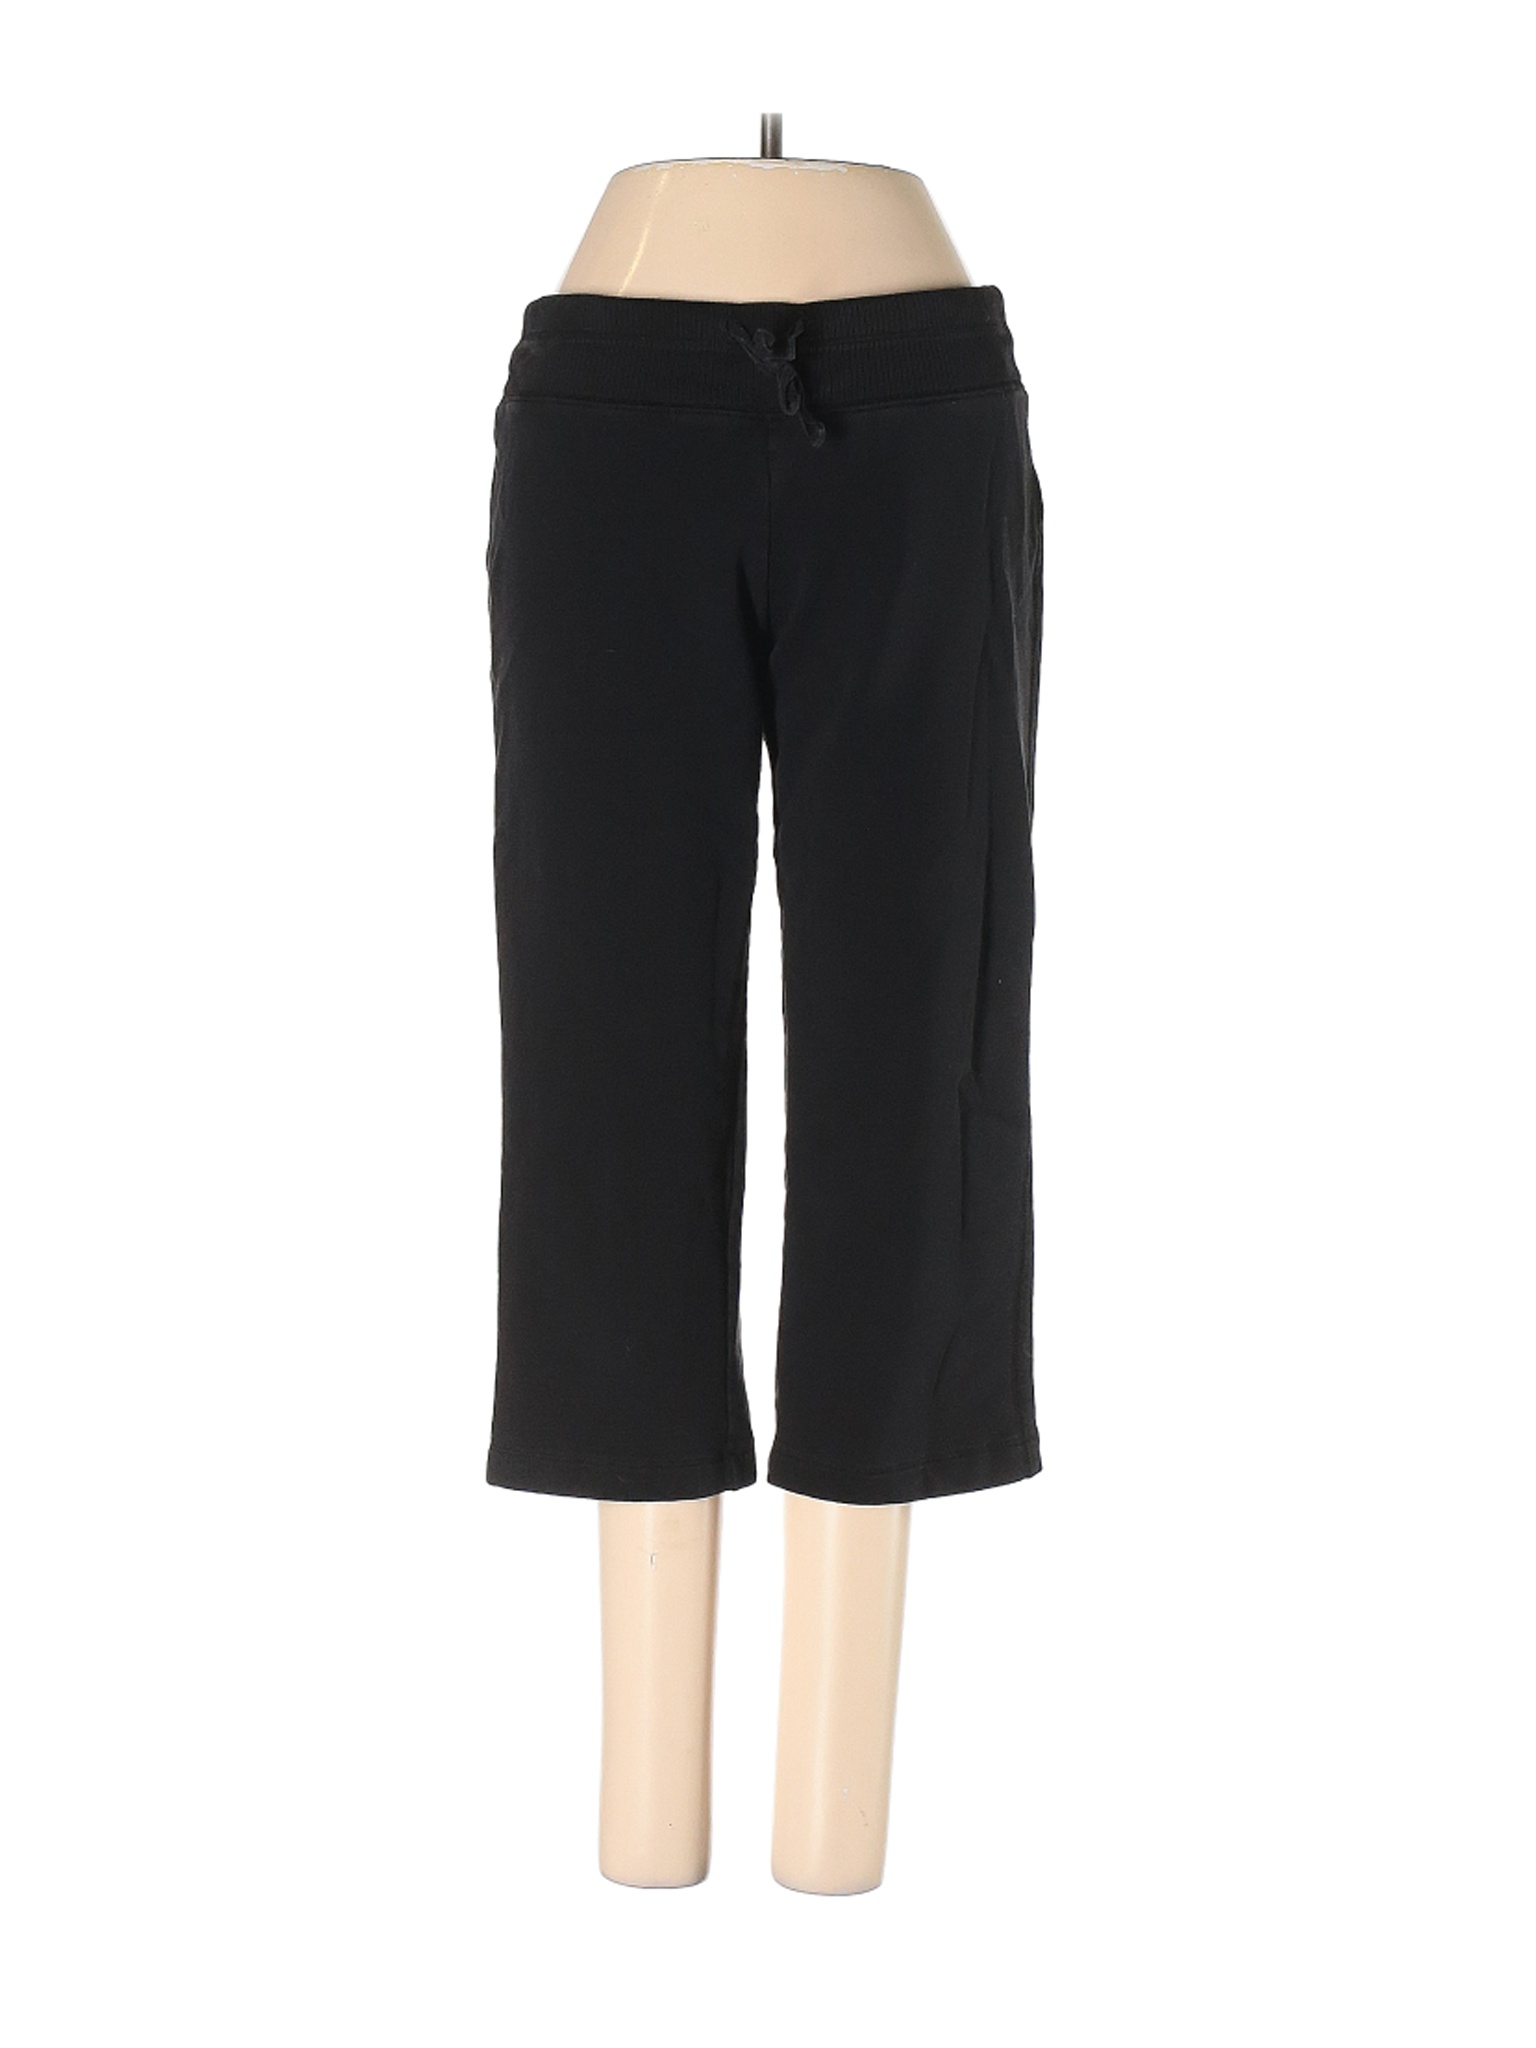 Old Navy Women Black Sweatpants XS | eBay